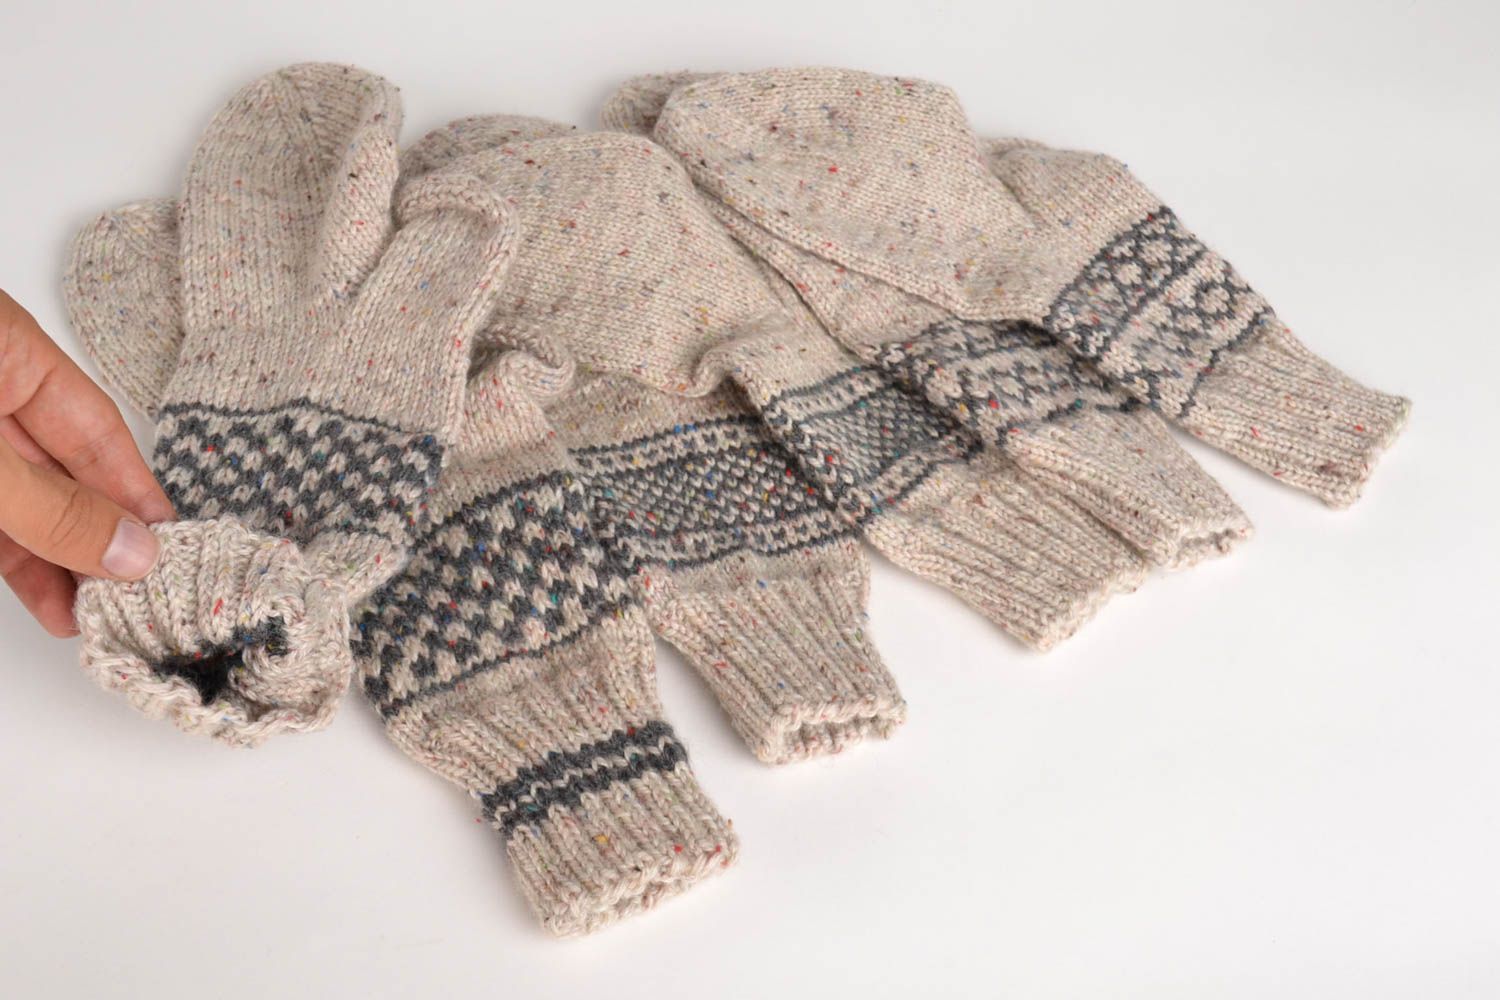 Handmade knitted socks warmest socks woolen socks winter clothes gifts for guys photo 5